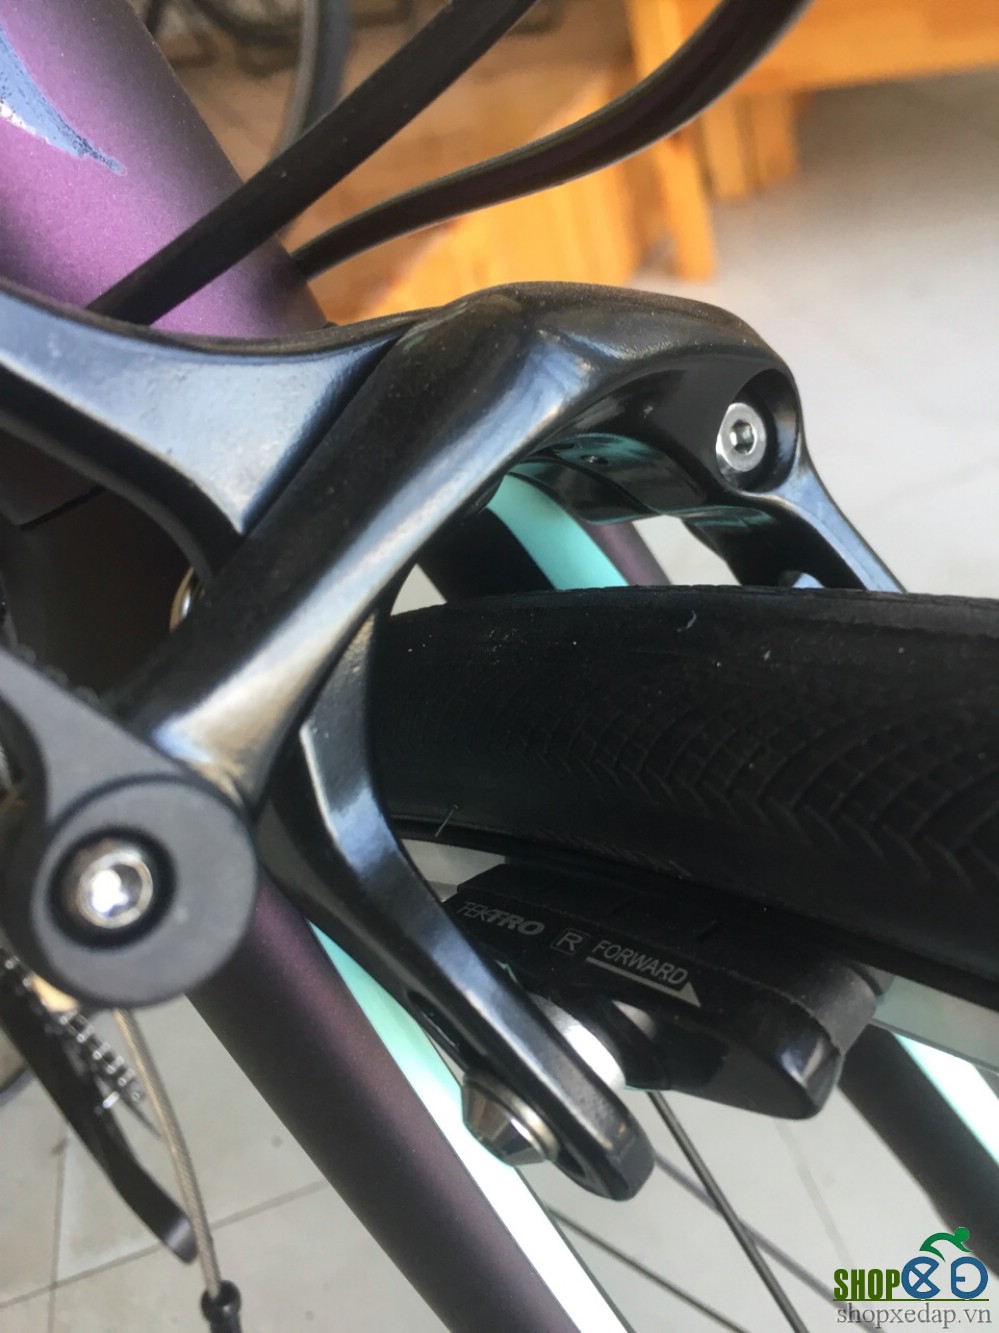 Xe đạp đua Specialized Dolce 2018